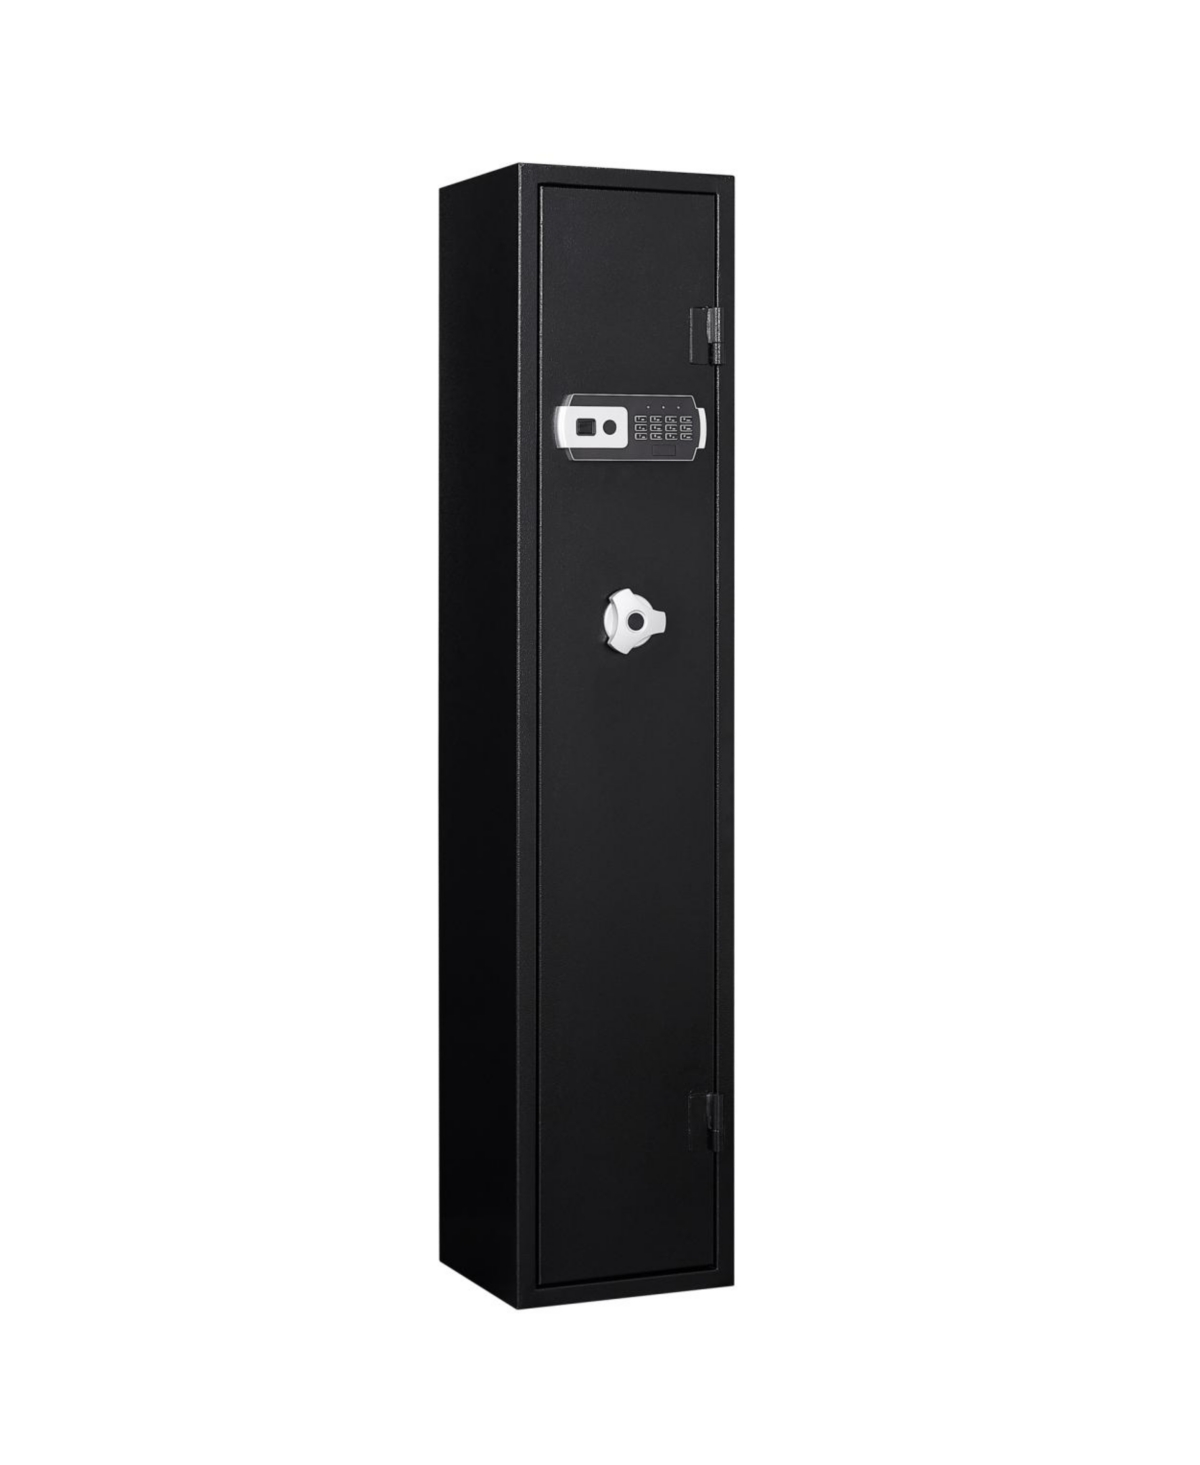 Digital Keypad Gun Safe Quick Access Electronic Storage Steel Security Cabinet - Black